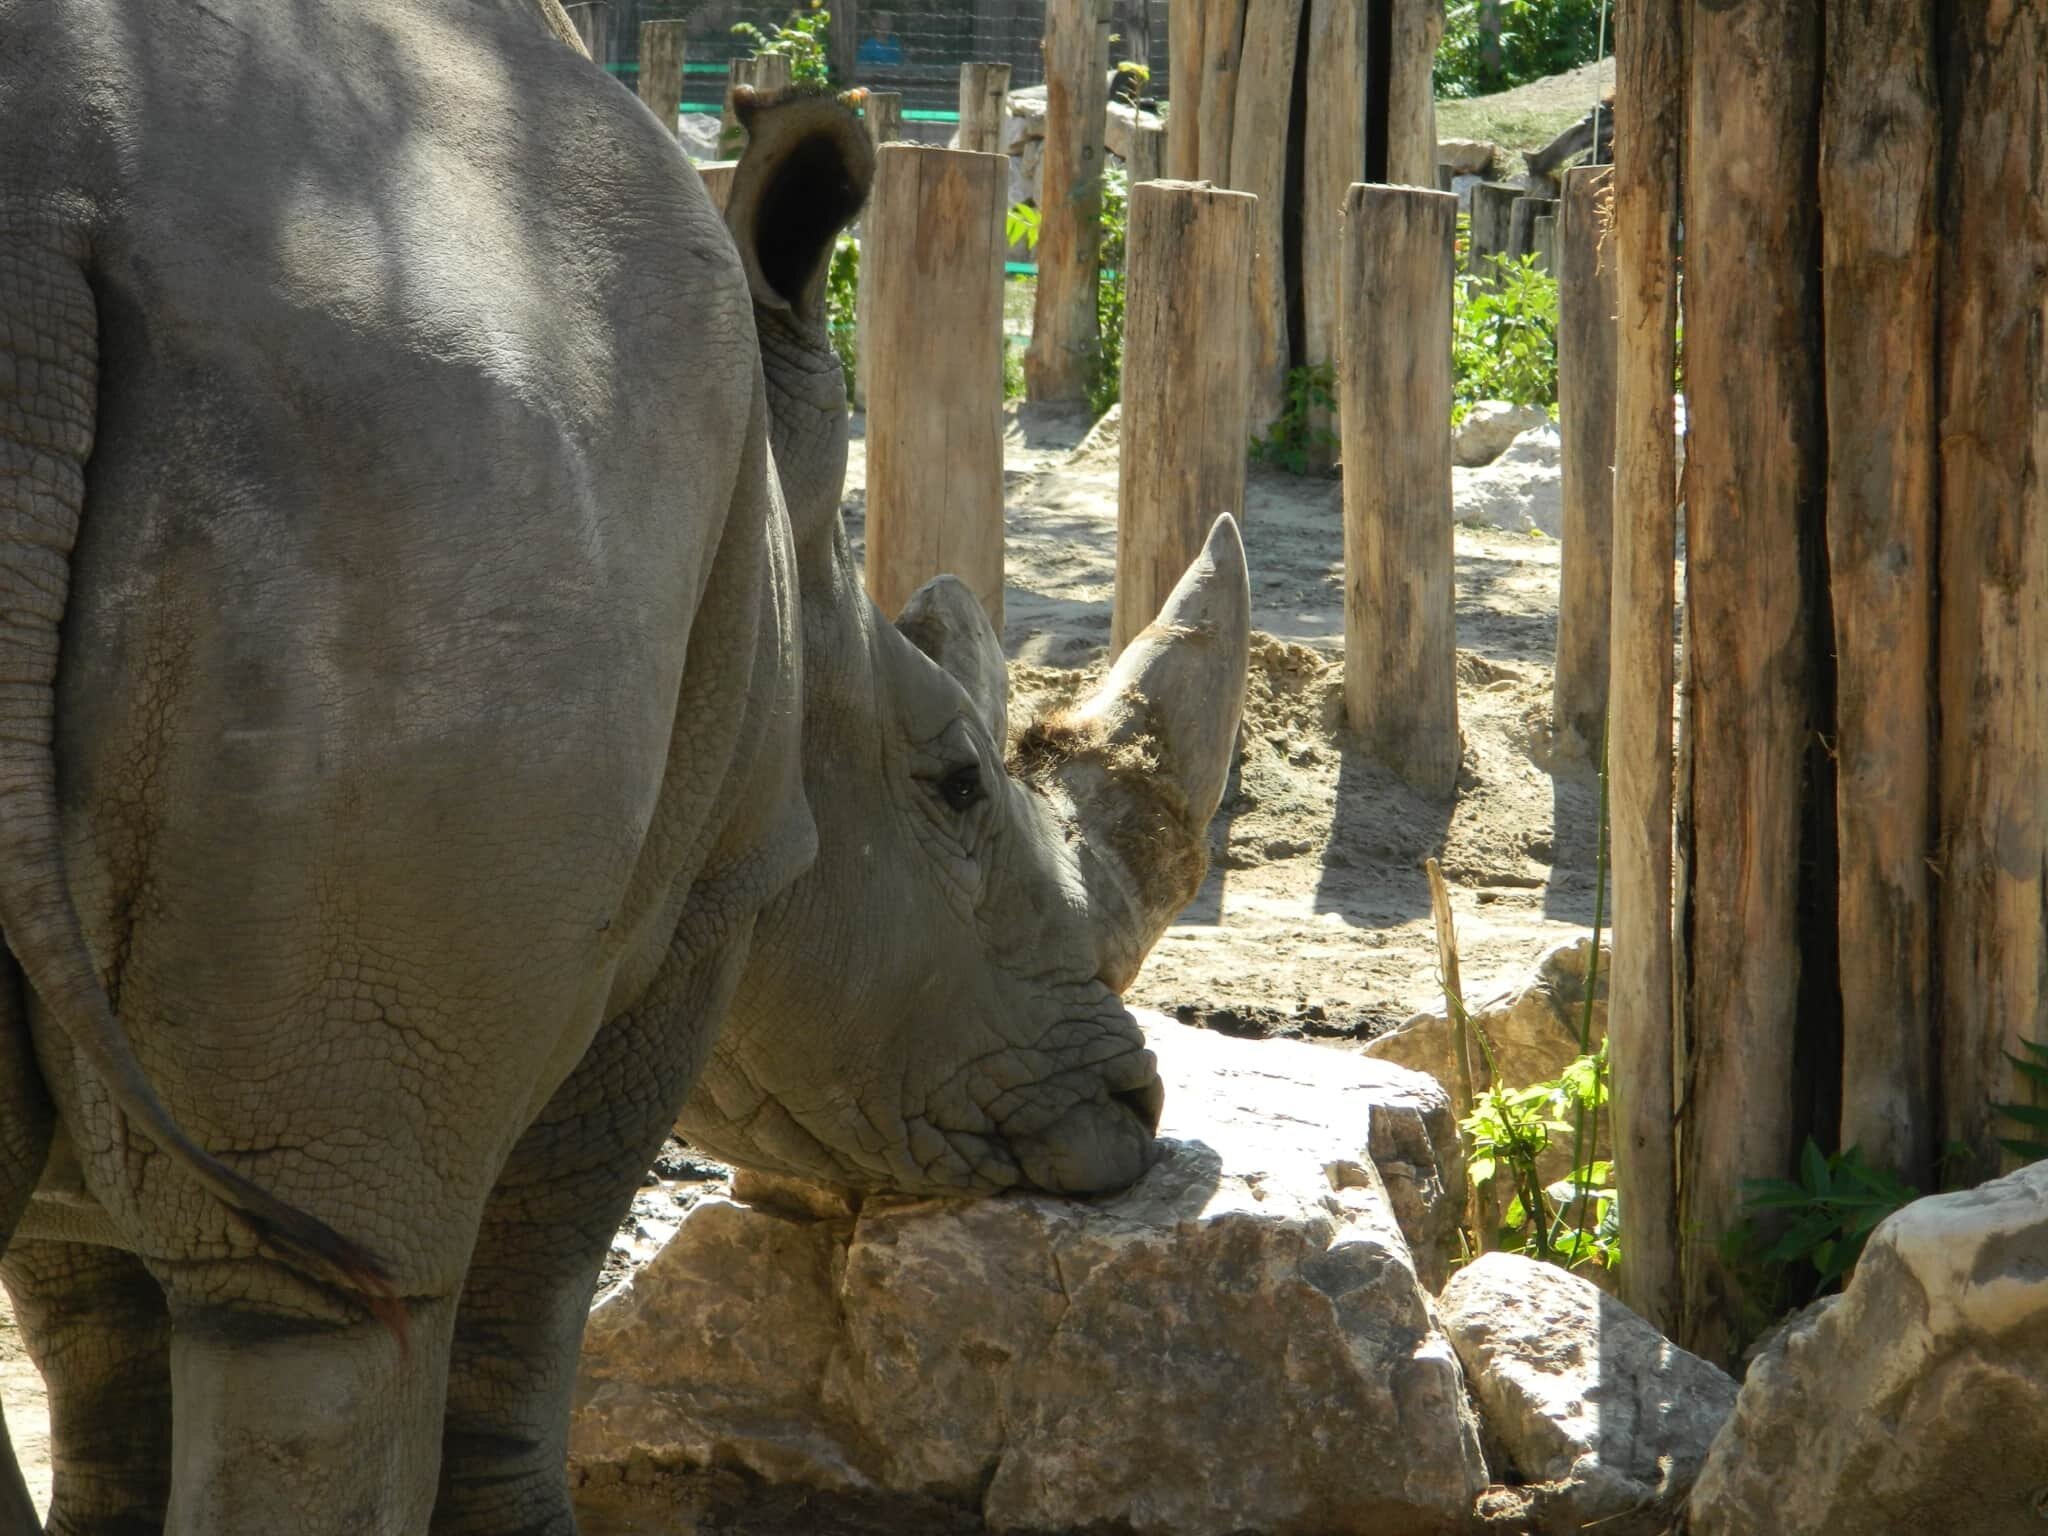 Resting rhino at Budapest Zoo